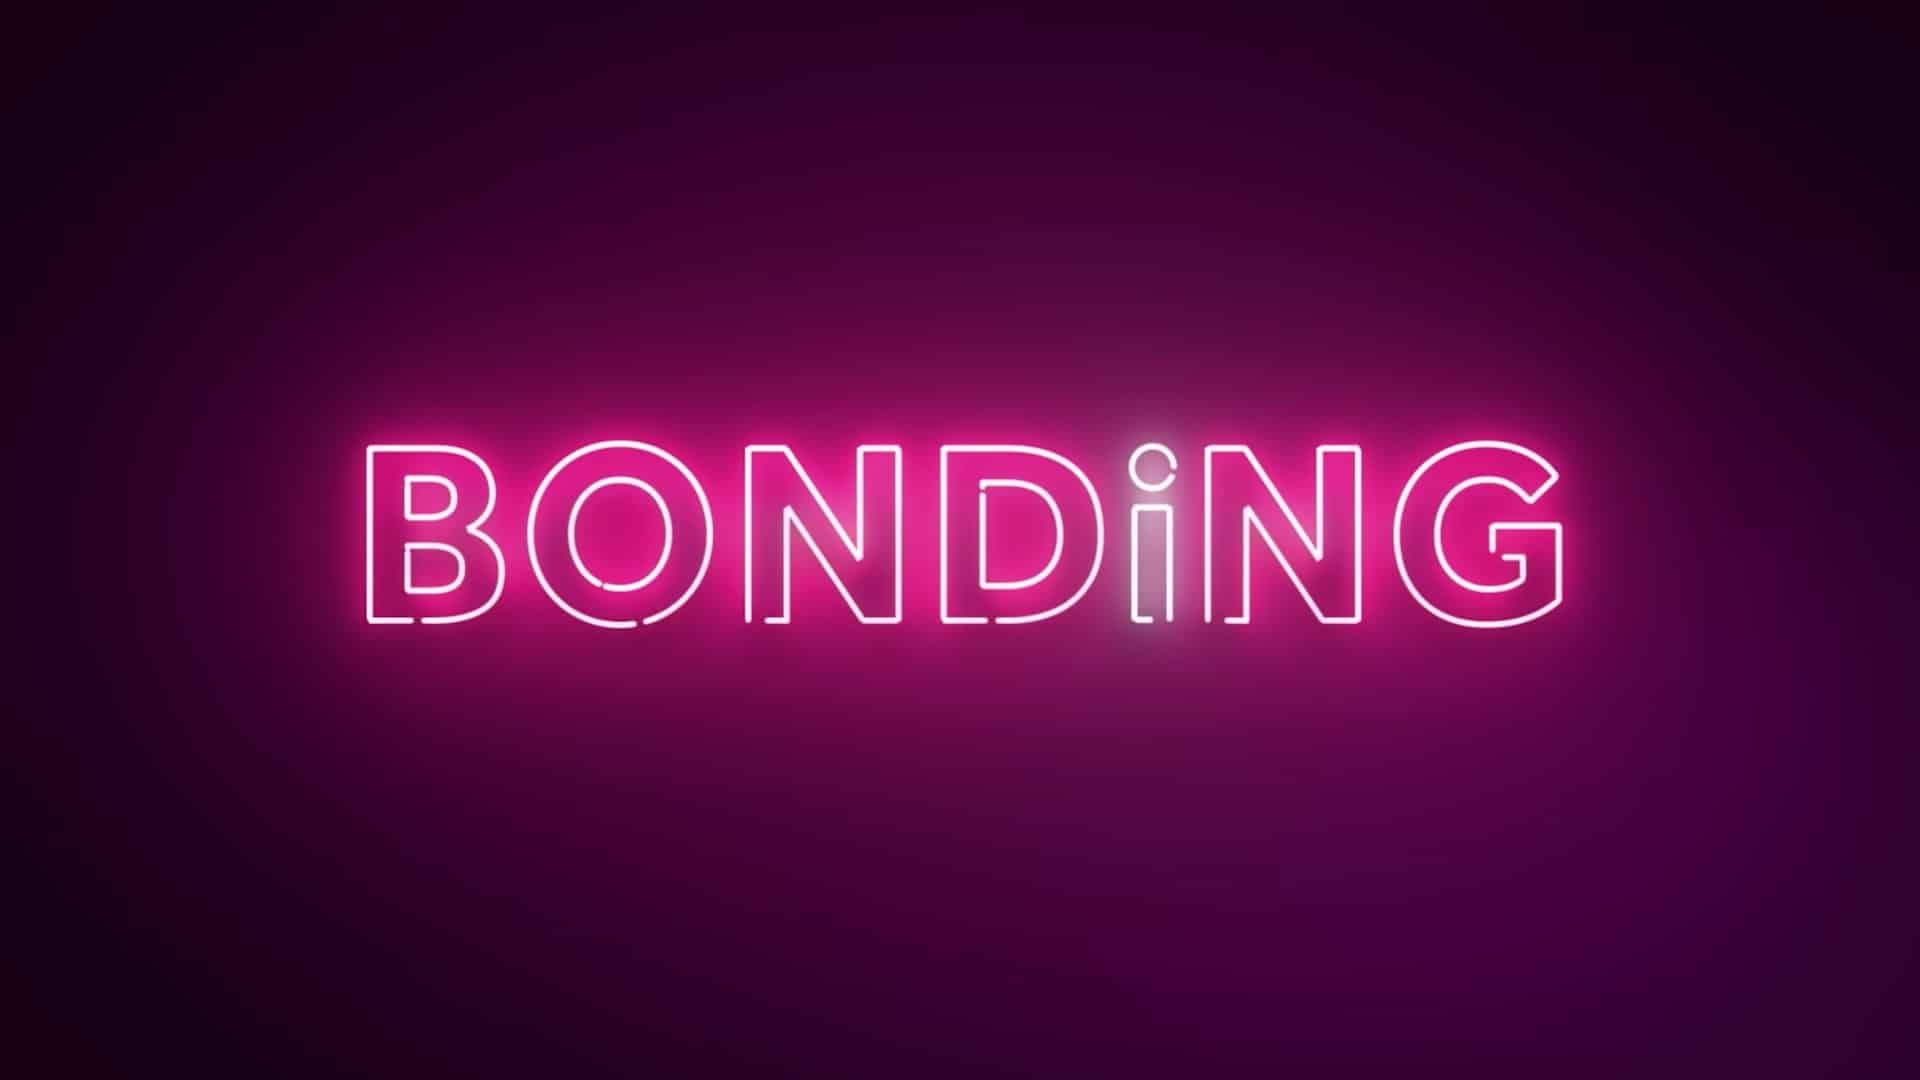 Netflix Bonding Season 2 Trailer, Netflix Comedy Series, Netflix Drama Series, Netflix Bondage Show, Coming to Netflix in January 2021